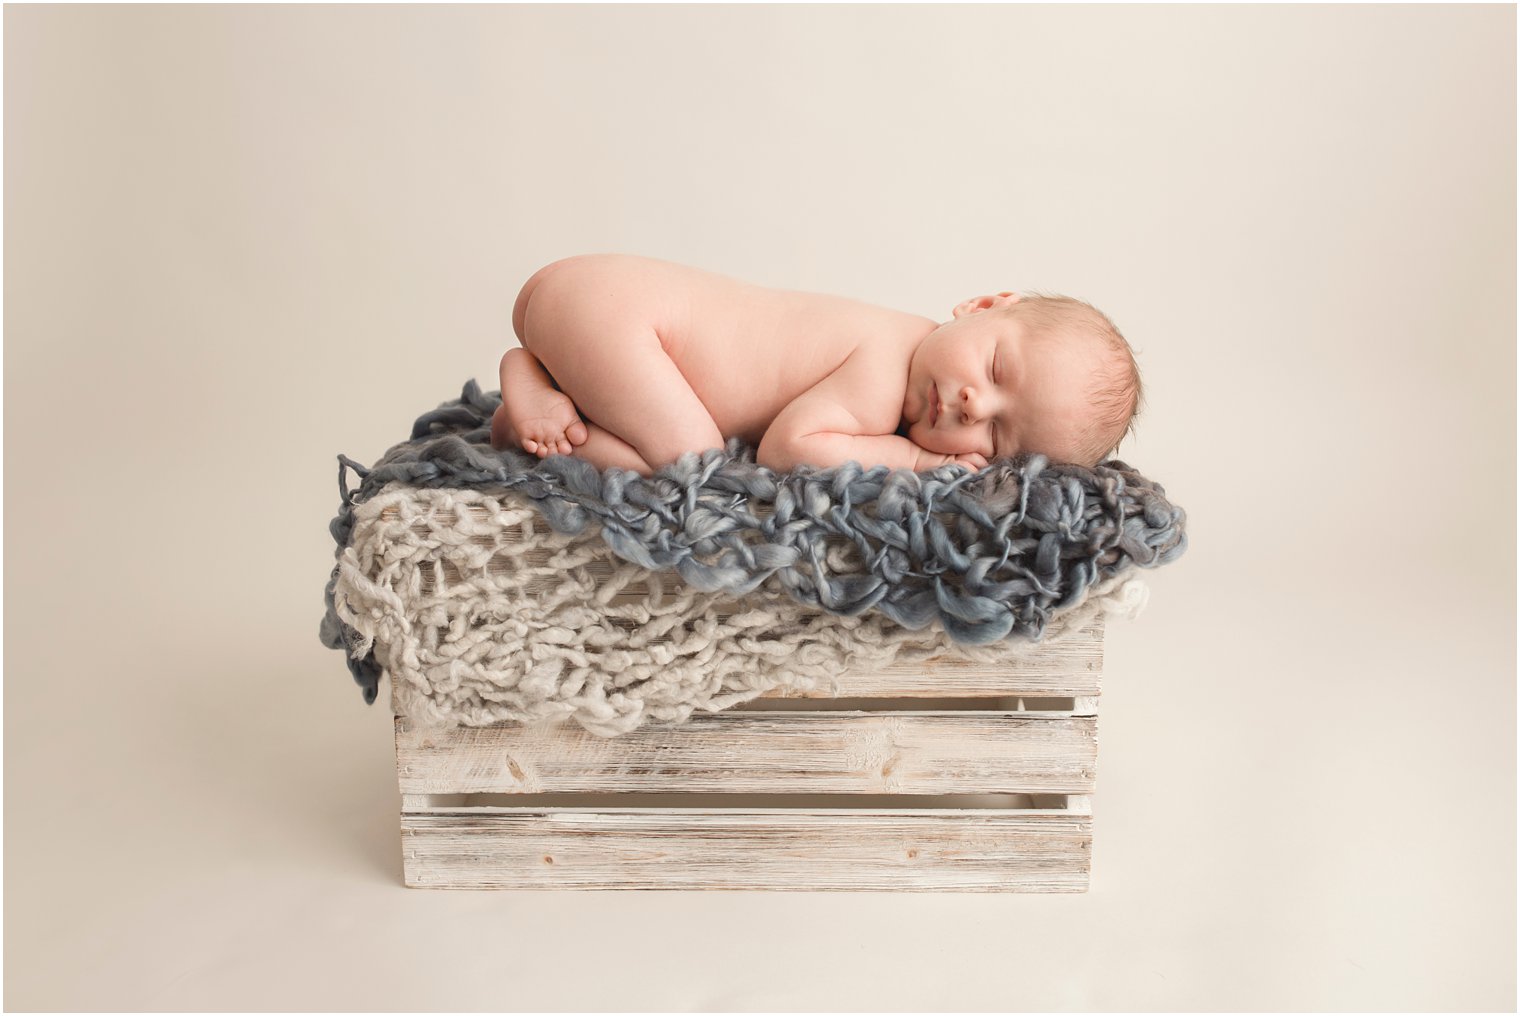 Newborn boy on a wooden crate | Red Bank NJ Newborn Photography by Idalia Photography